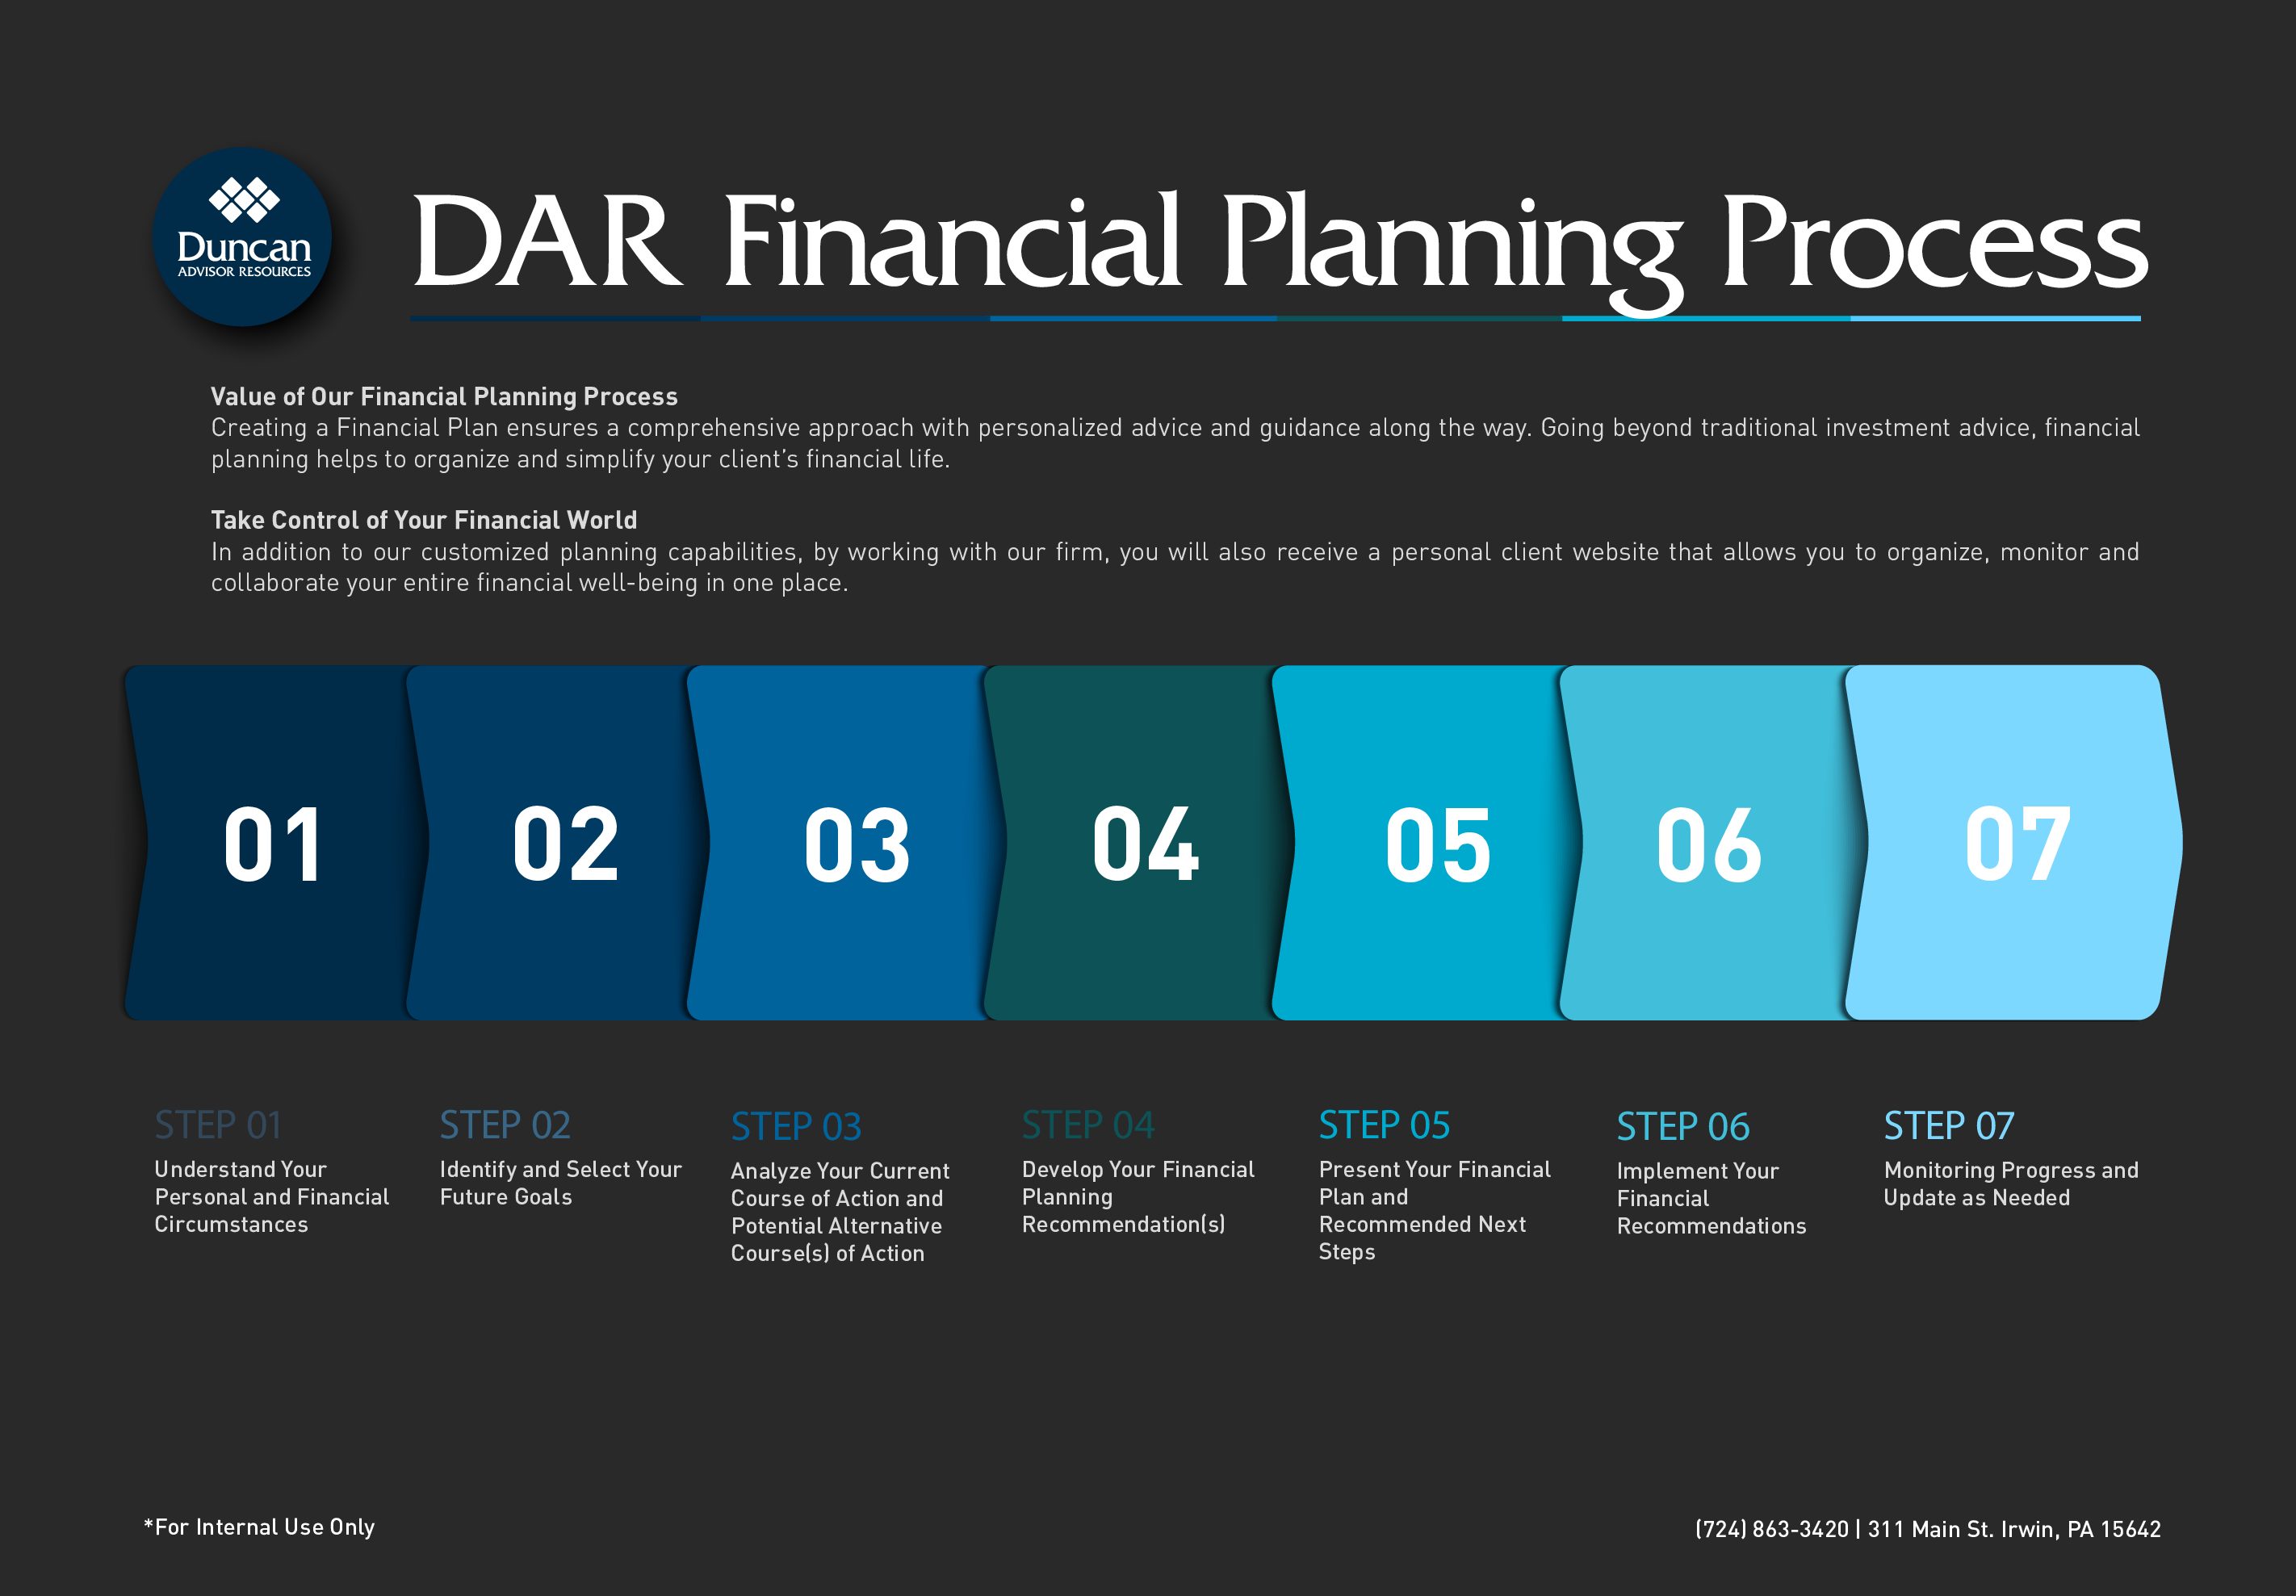 Webinars > Financial Planning > Resources